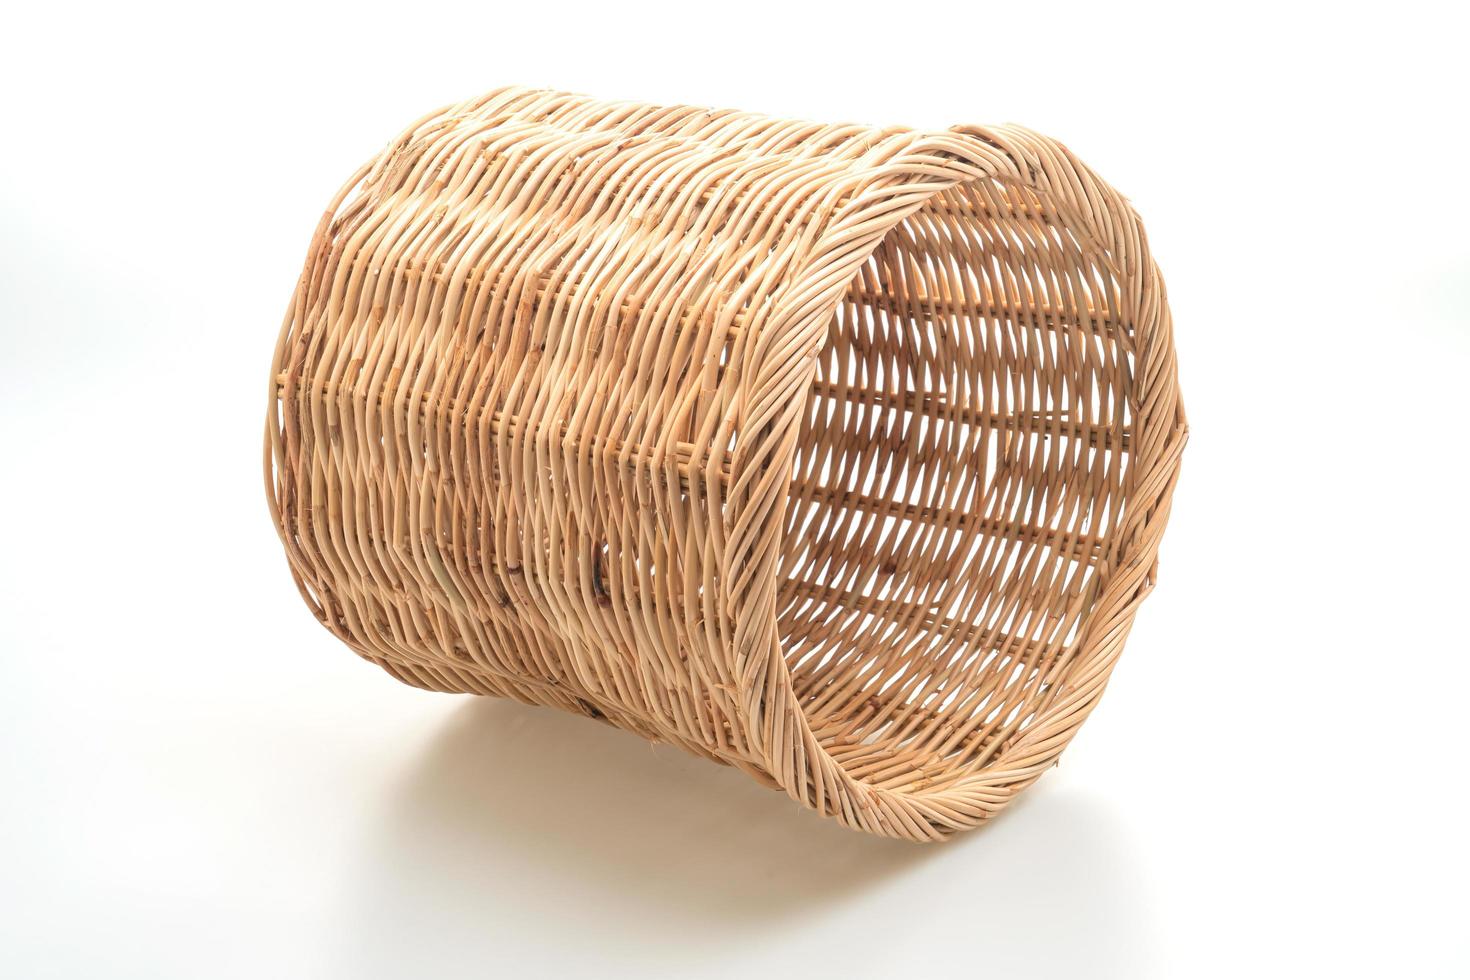 Wicker basket isolated on white background photo